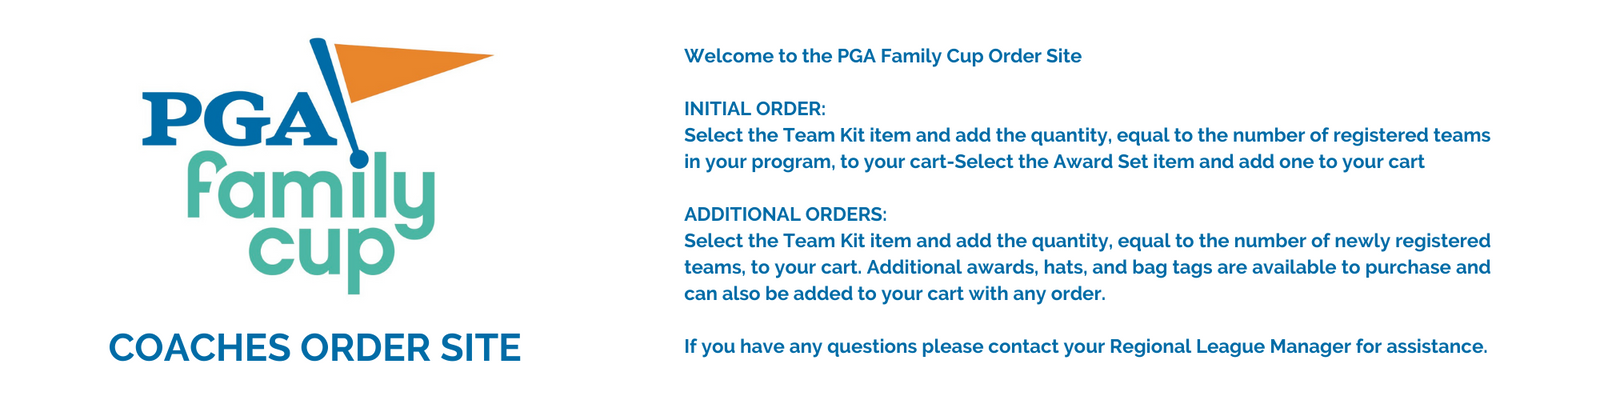 PGA Family Cup Coaches Order Site